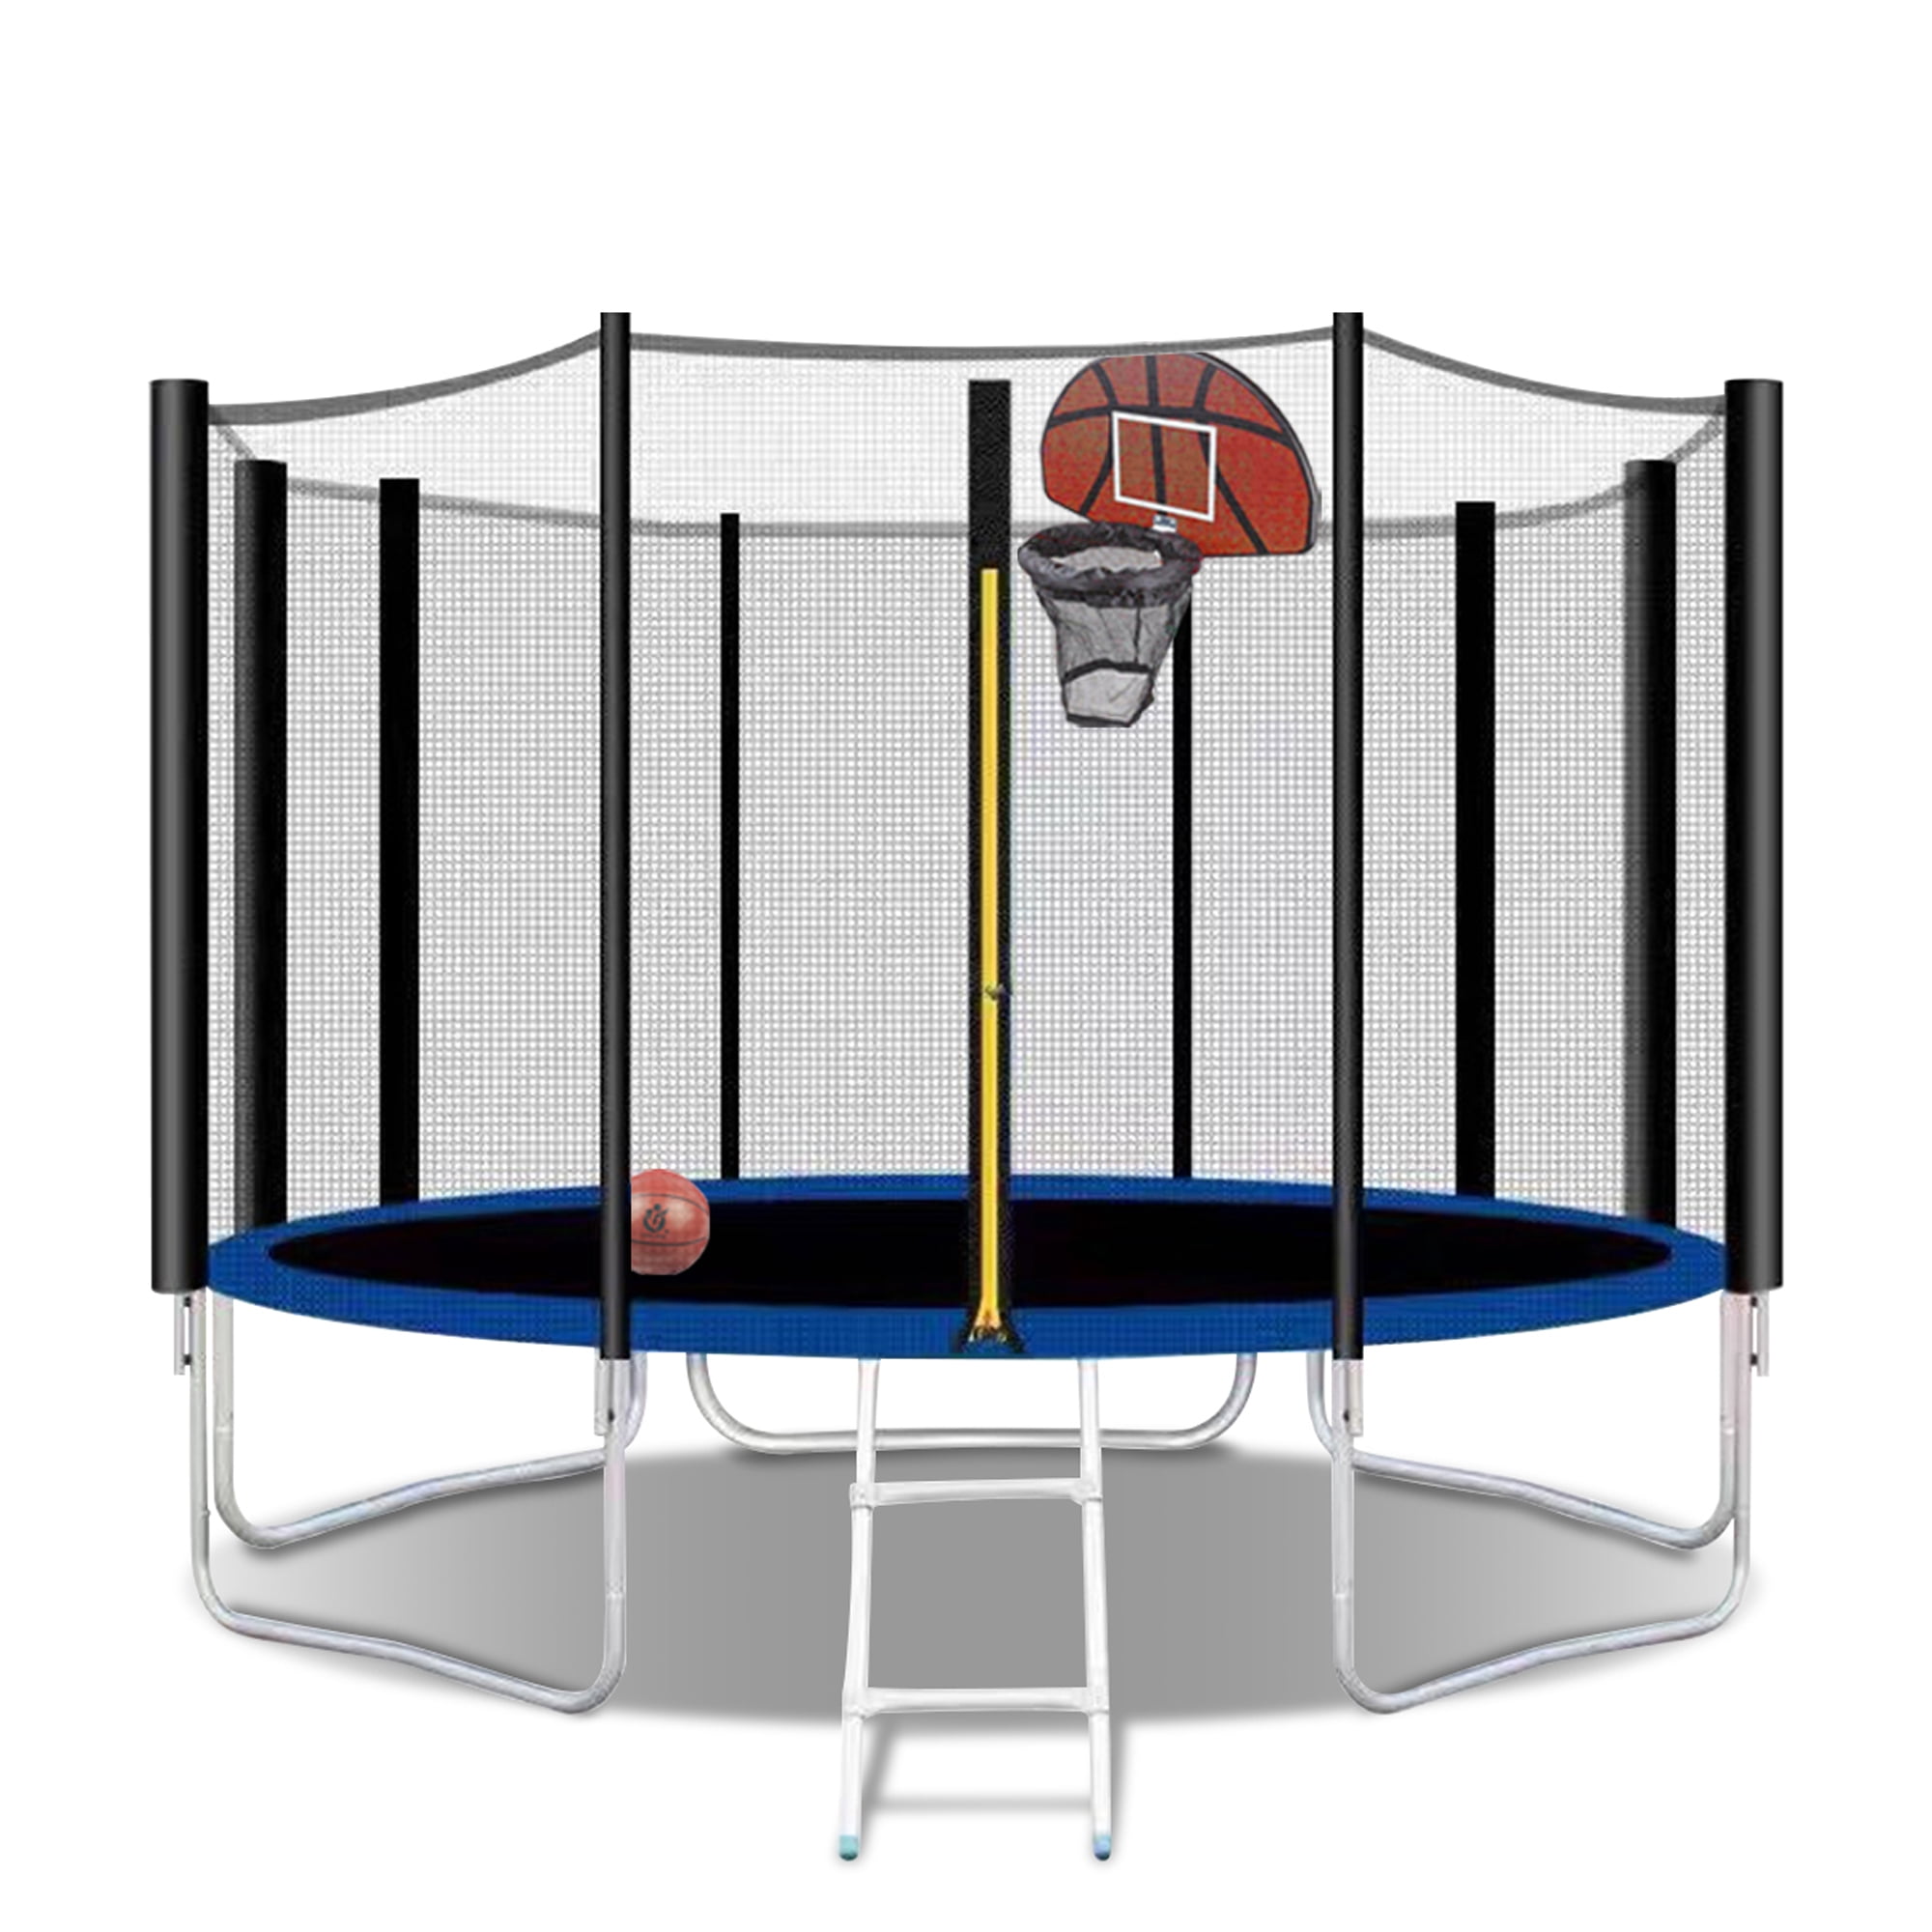 Details about   5 6 8 10 12FOOT Round Trampoline w/ Safety Enclosure Basketball Hoop Ladder 